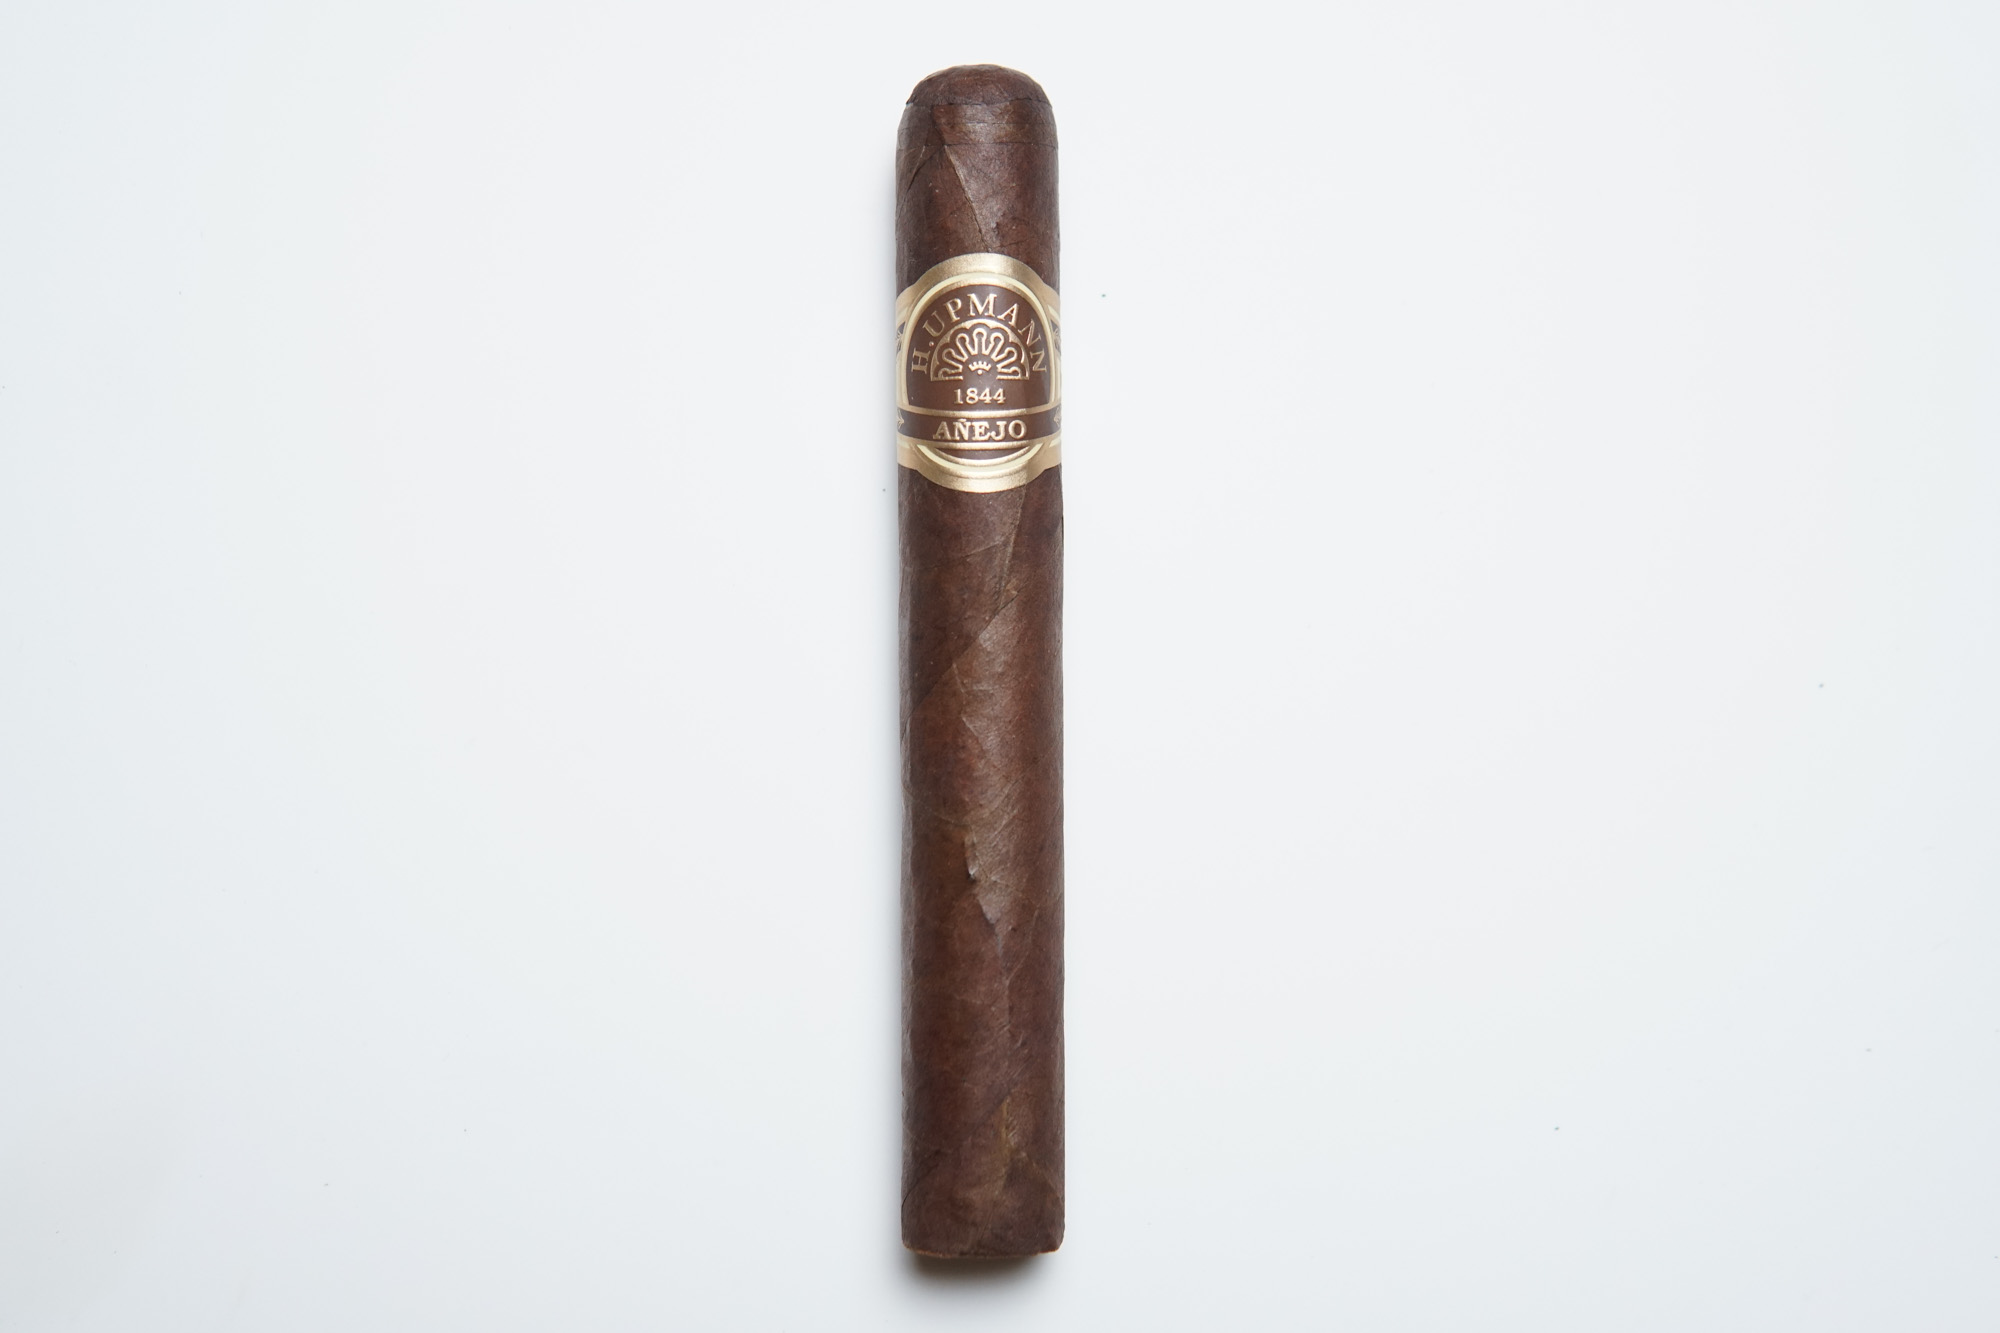 H Upmann Anejo Single Cigar